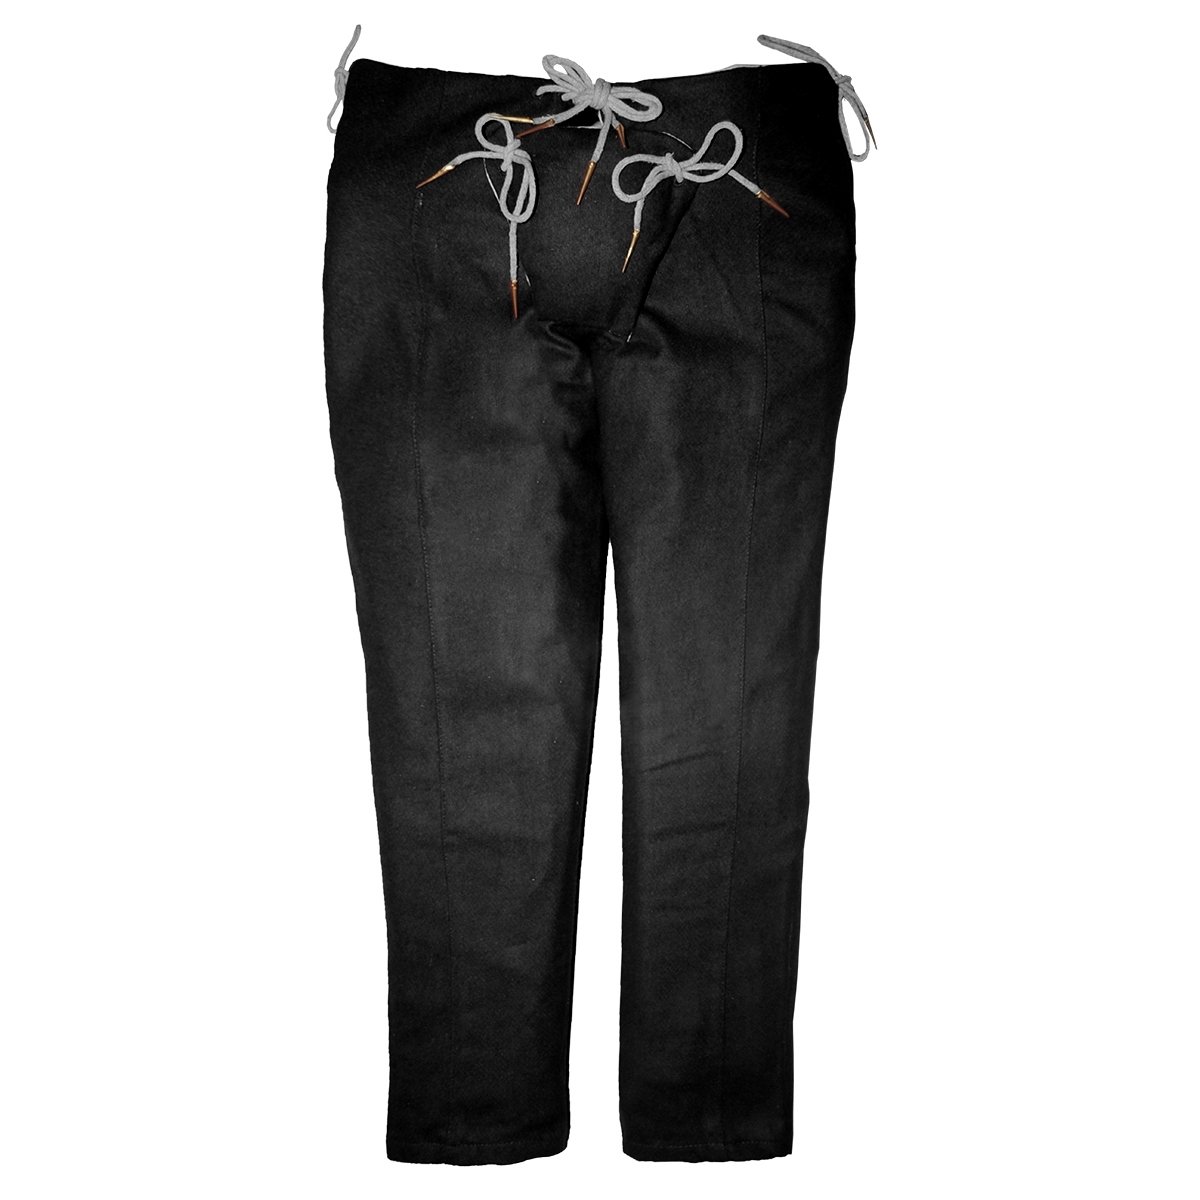 Man's 15th C. Trousers -Black, Size M